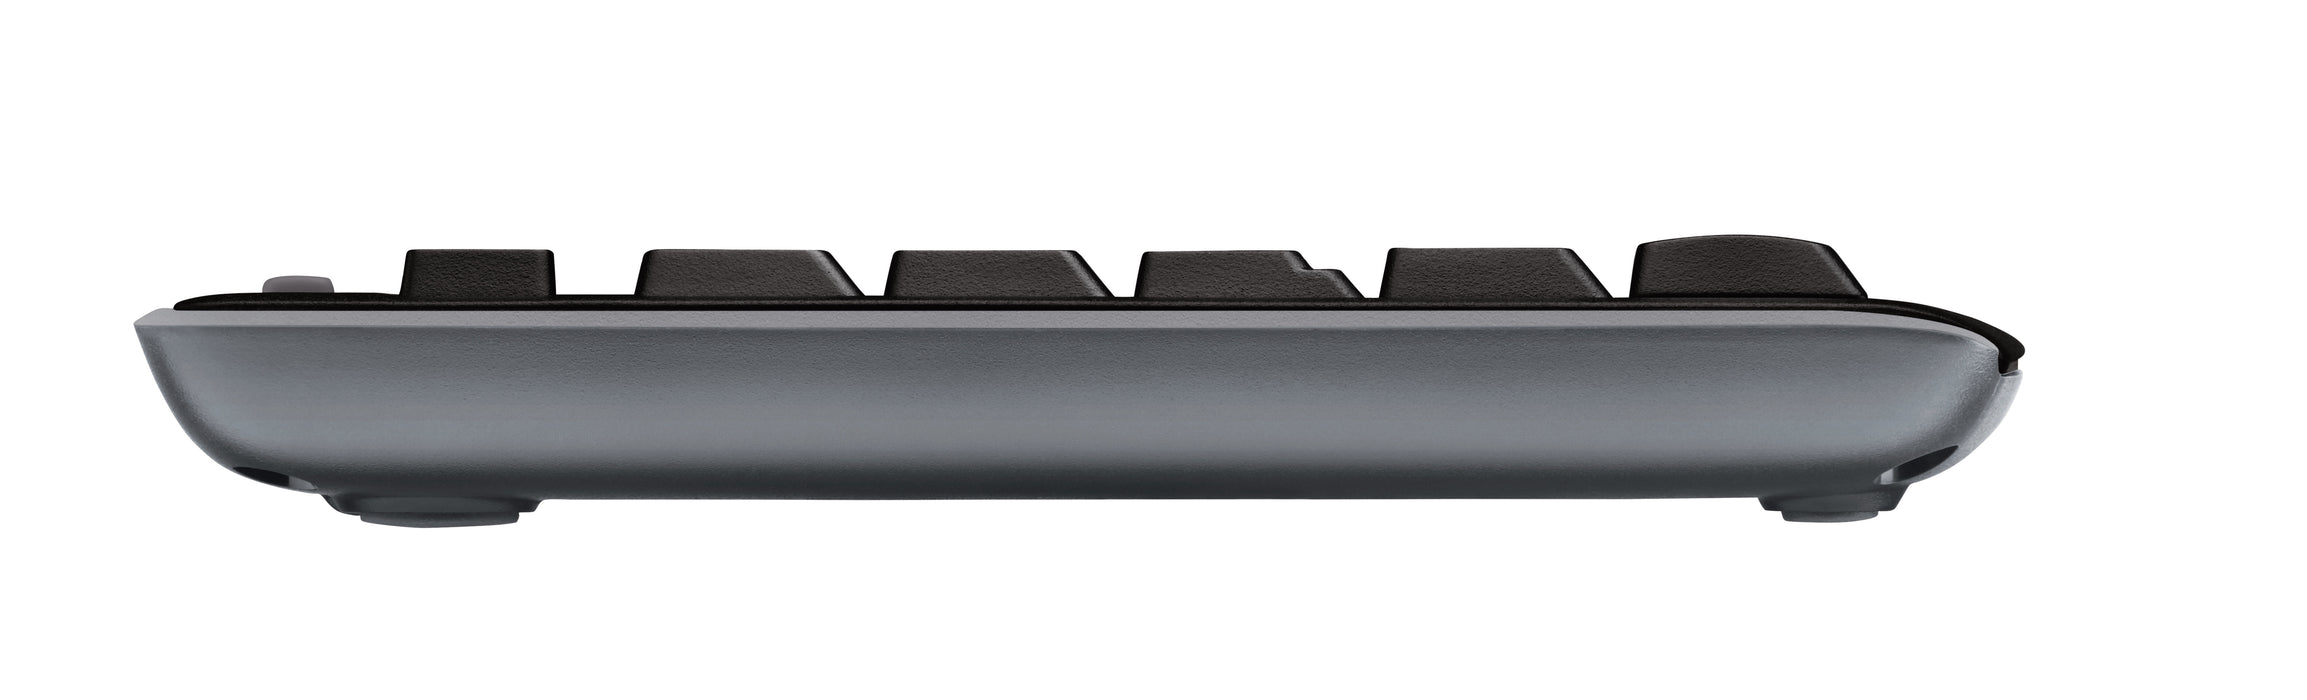 Logitech Wireless Combo MK270, Full-size (100%), Wireless, USB, AZERTY, Black, Mouse included